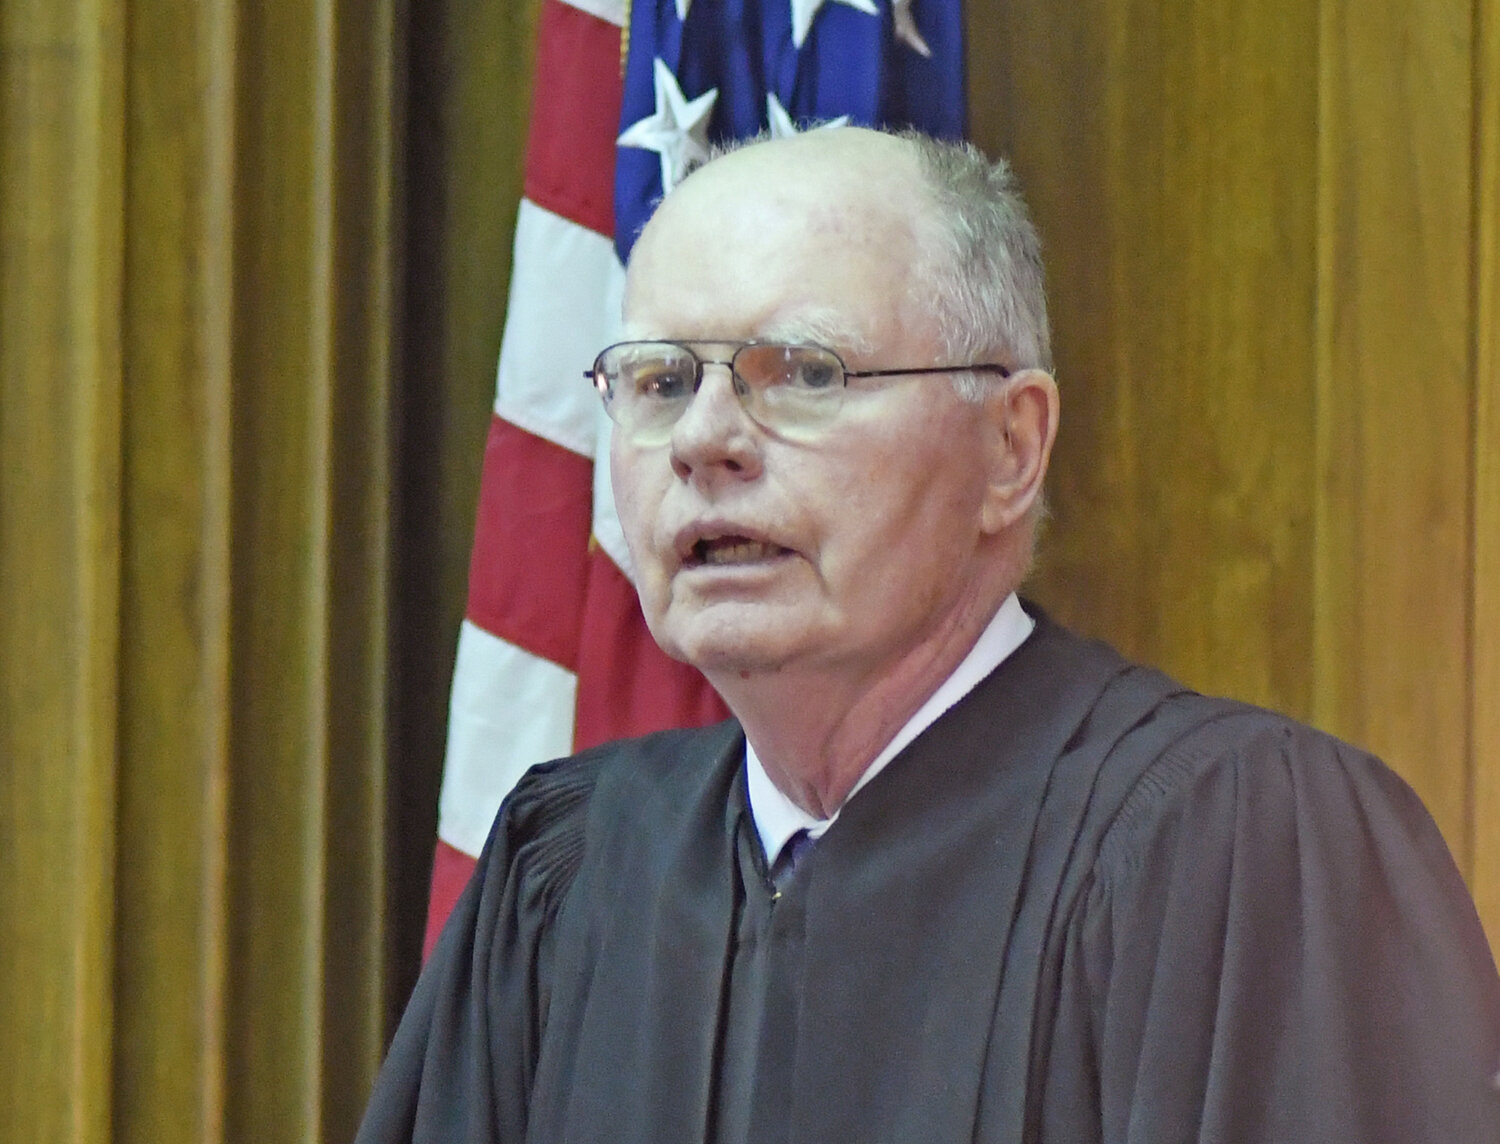 The Hon. Judge David N. Hurd